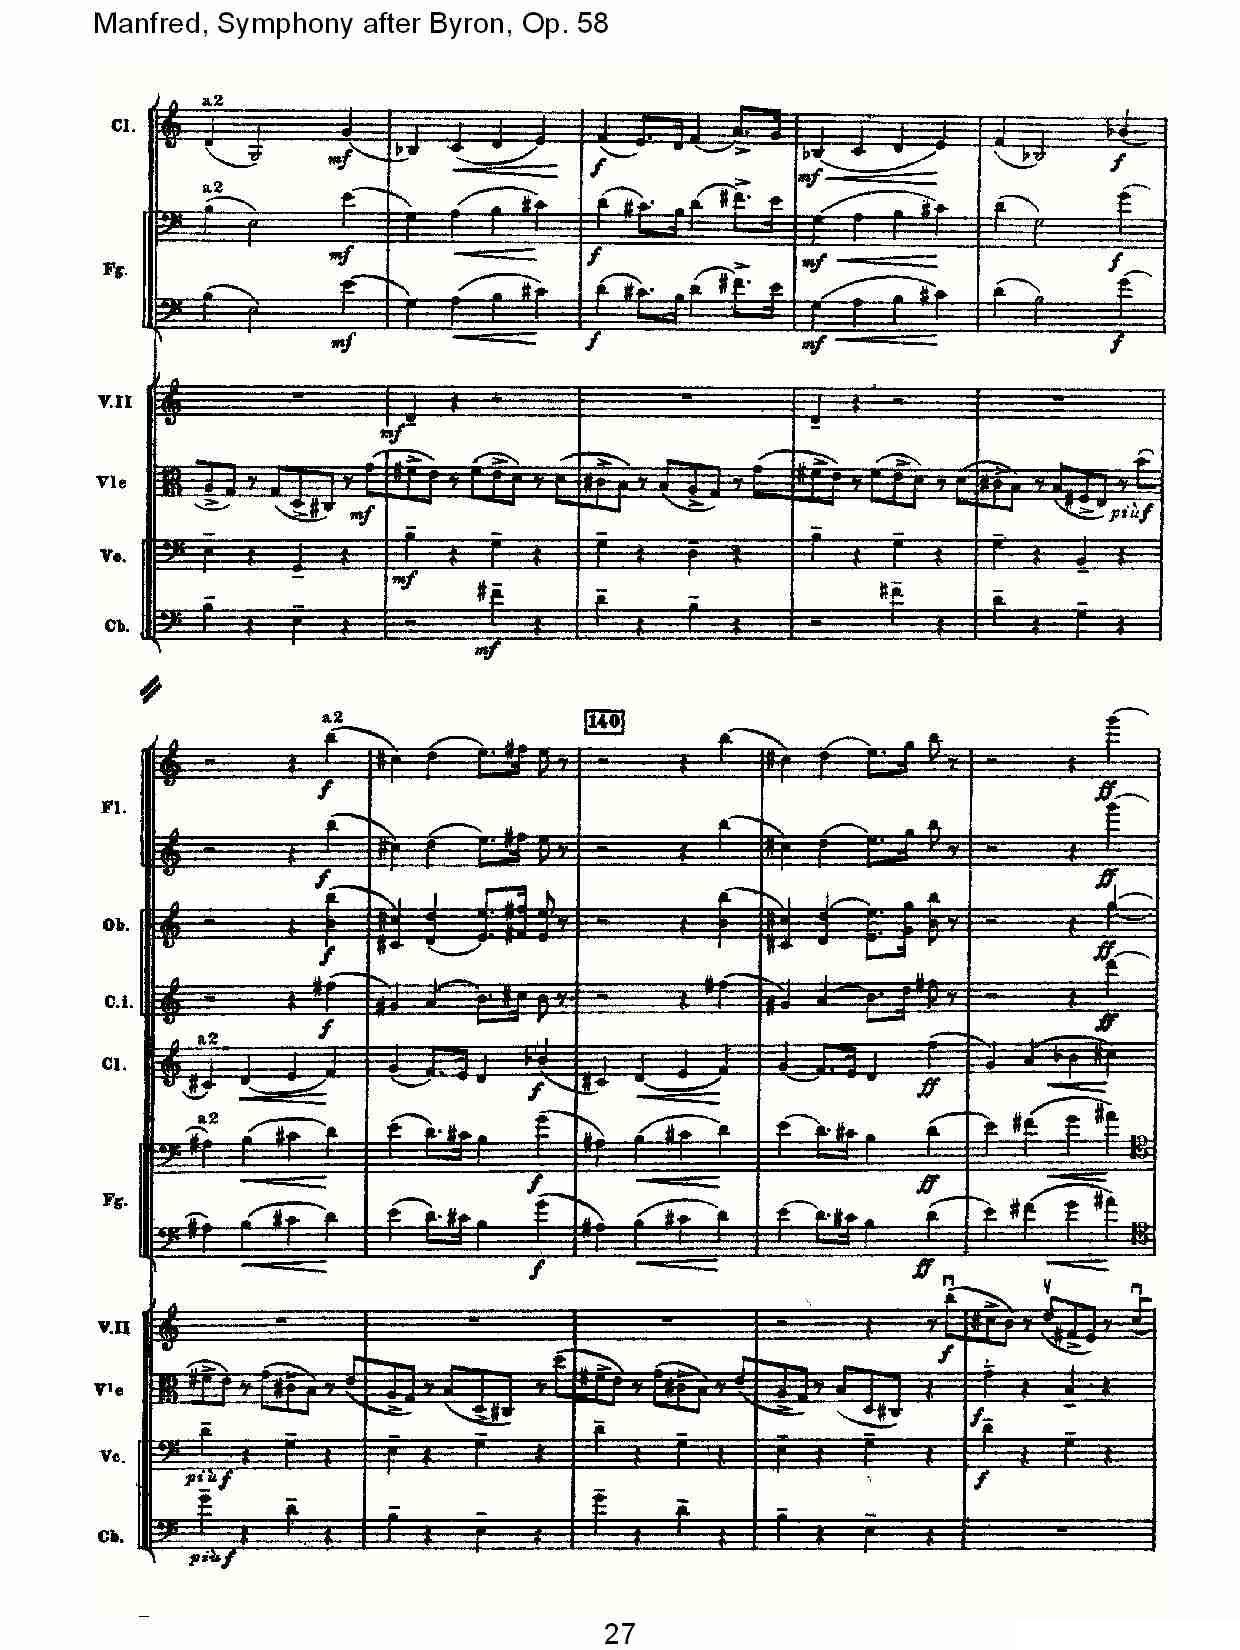 Manfred, Symphony after Byron, Op.58第一乐章（一）其它曲谱（图27）